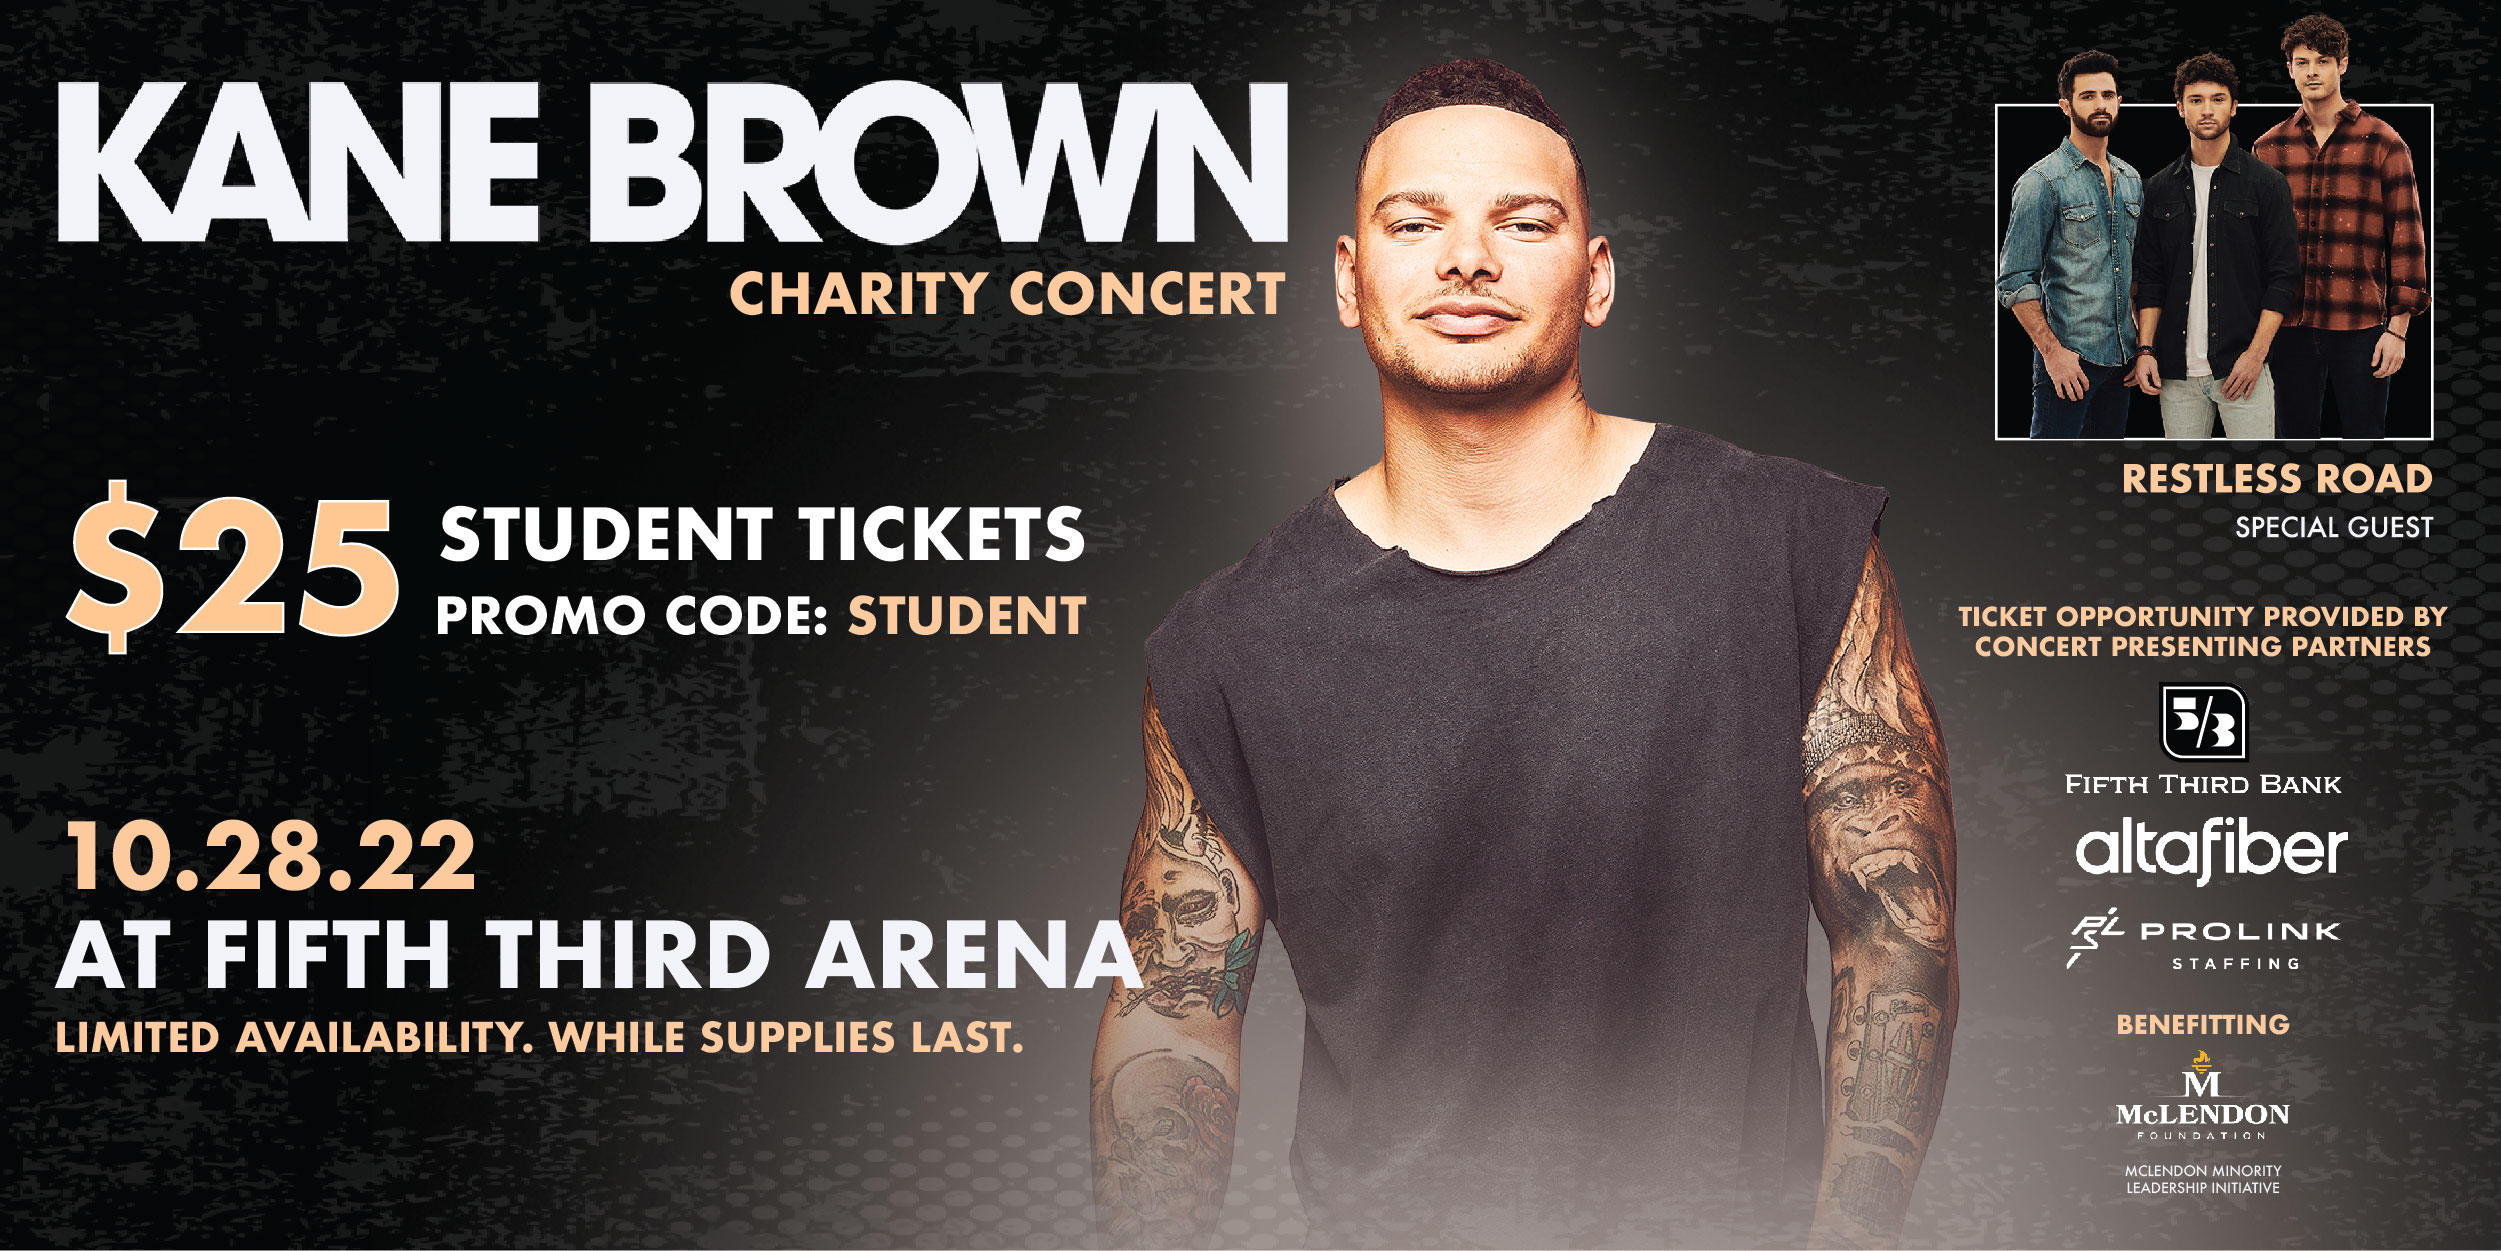 KSR offers discount tickets to Kane Brown Charity Concert in Cincinnati